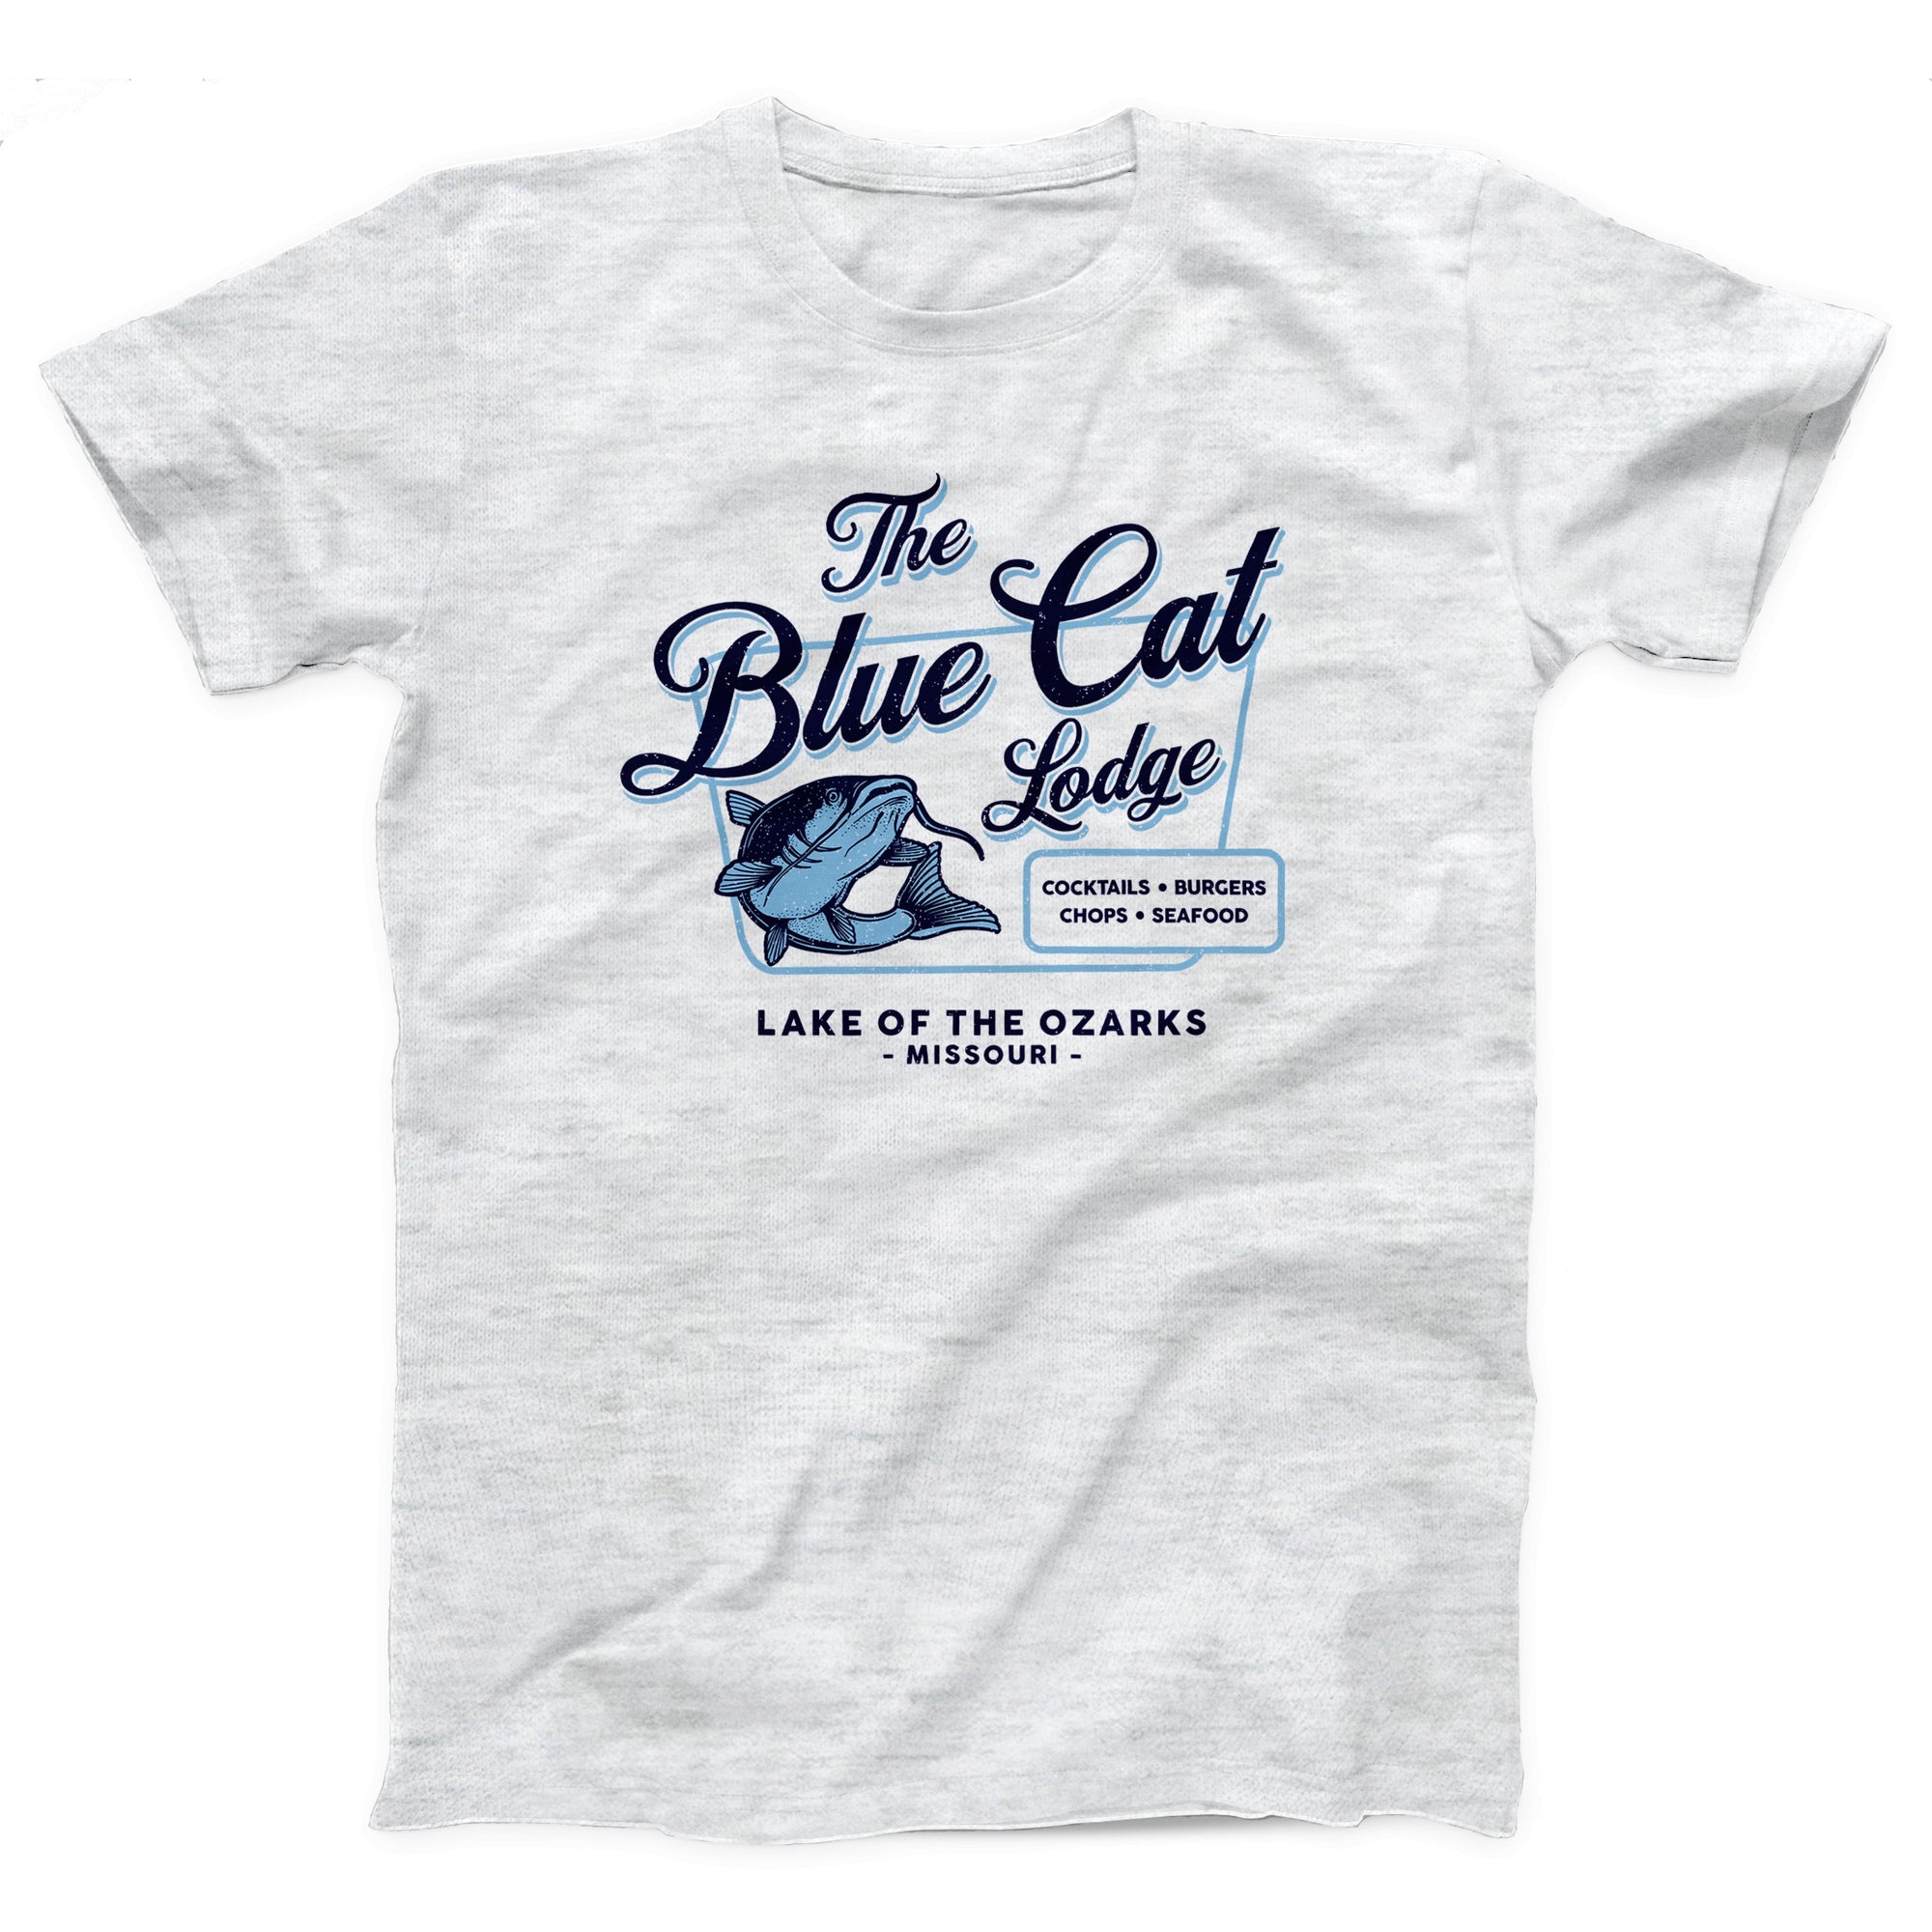 Blue Cat Lodge Adult Unisex T-Shirt - marionmartigny